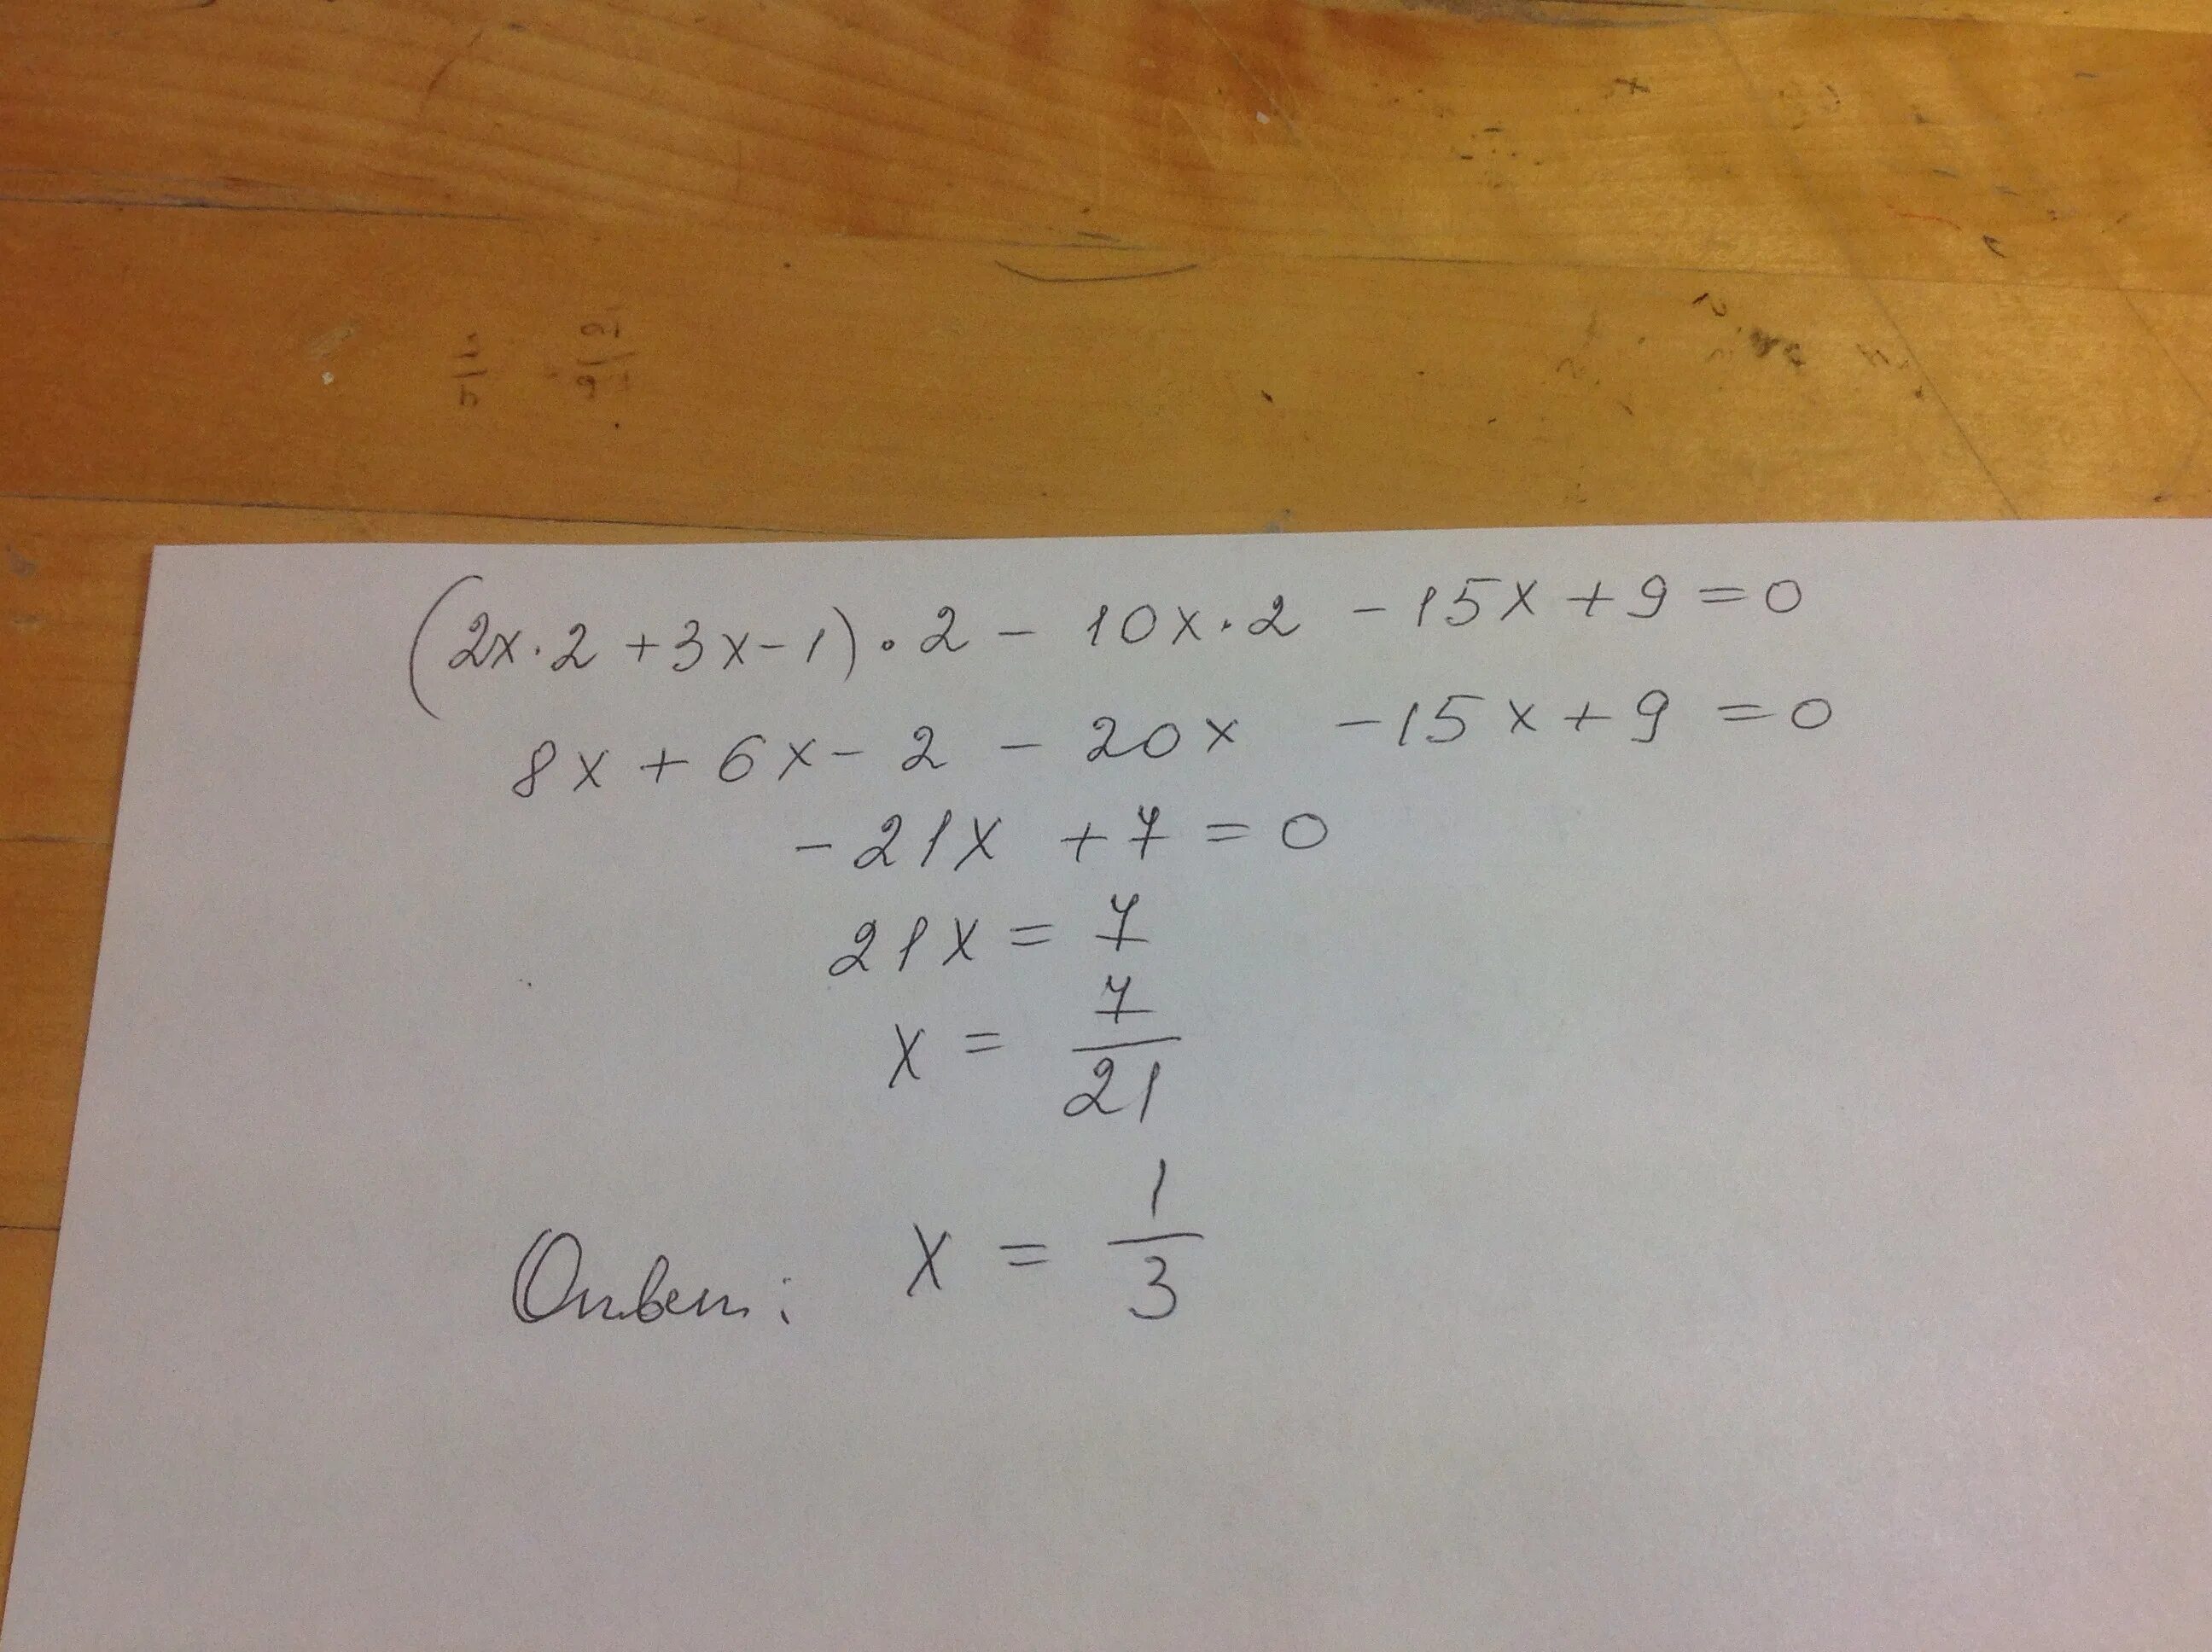 X3 2 3x 9. X3+2x2+2x+1. 10x 15 уравнение решении. 1/2x2-10. (X - 15) + (3x - 7) = 2(x−15)+(3x−7)=2.